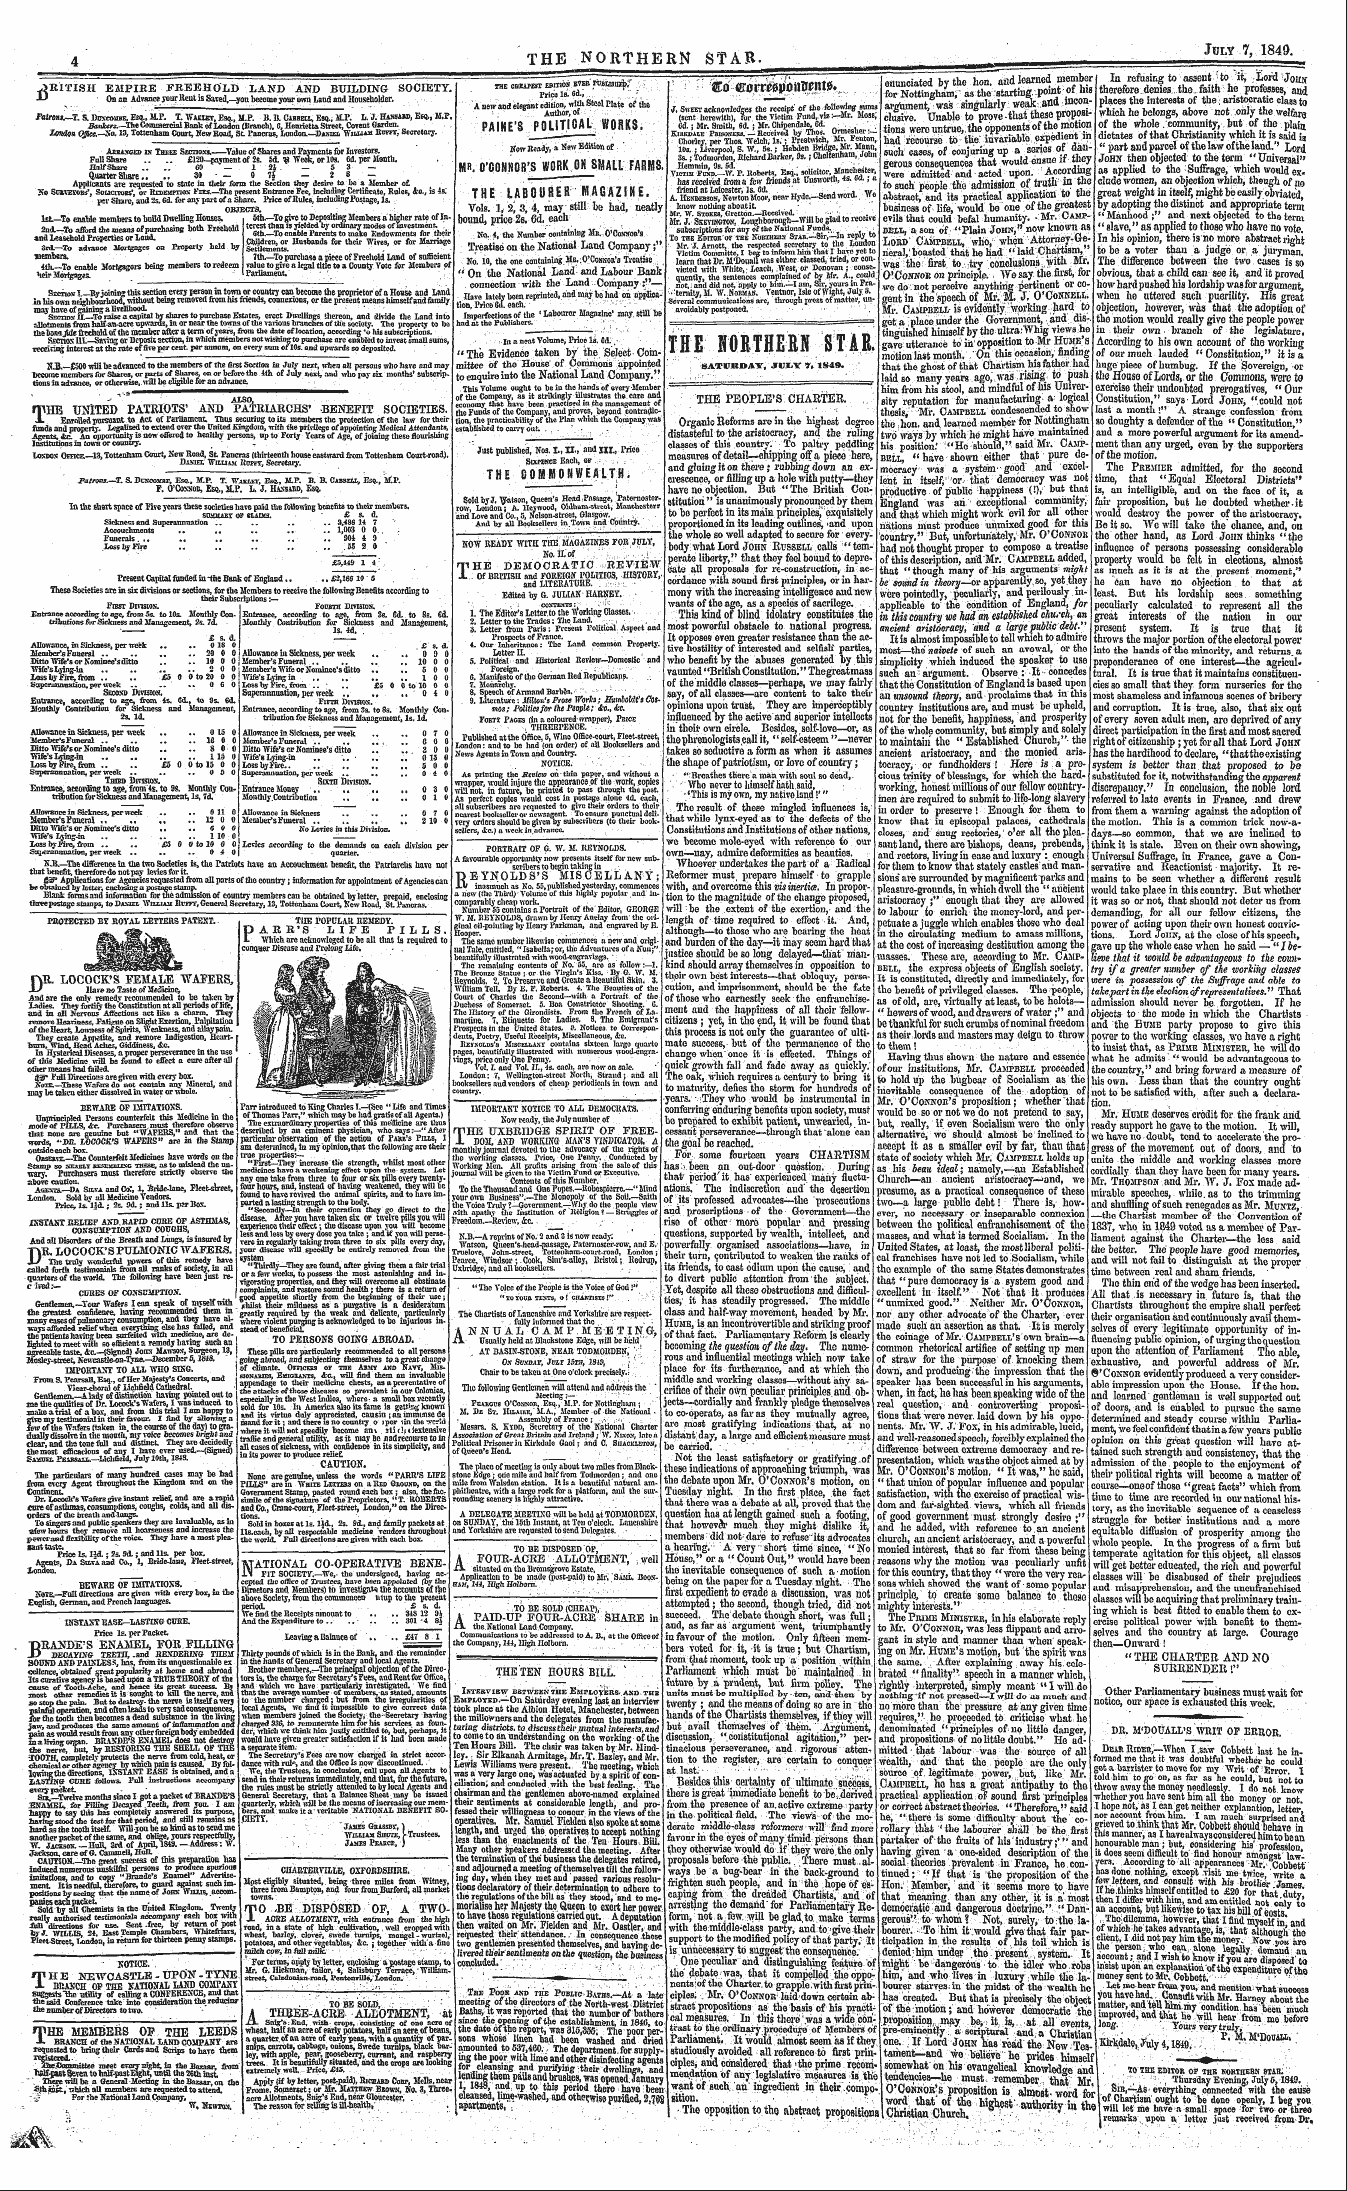 Northern Star (1837-1852): jS F Y, 3rd edition - Ad00421